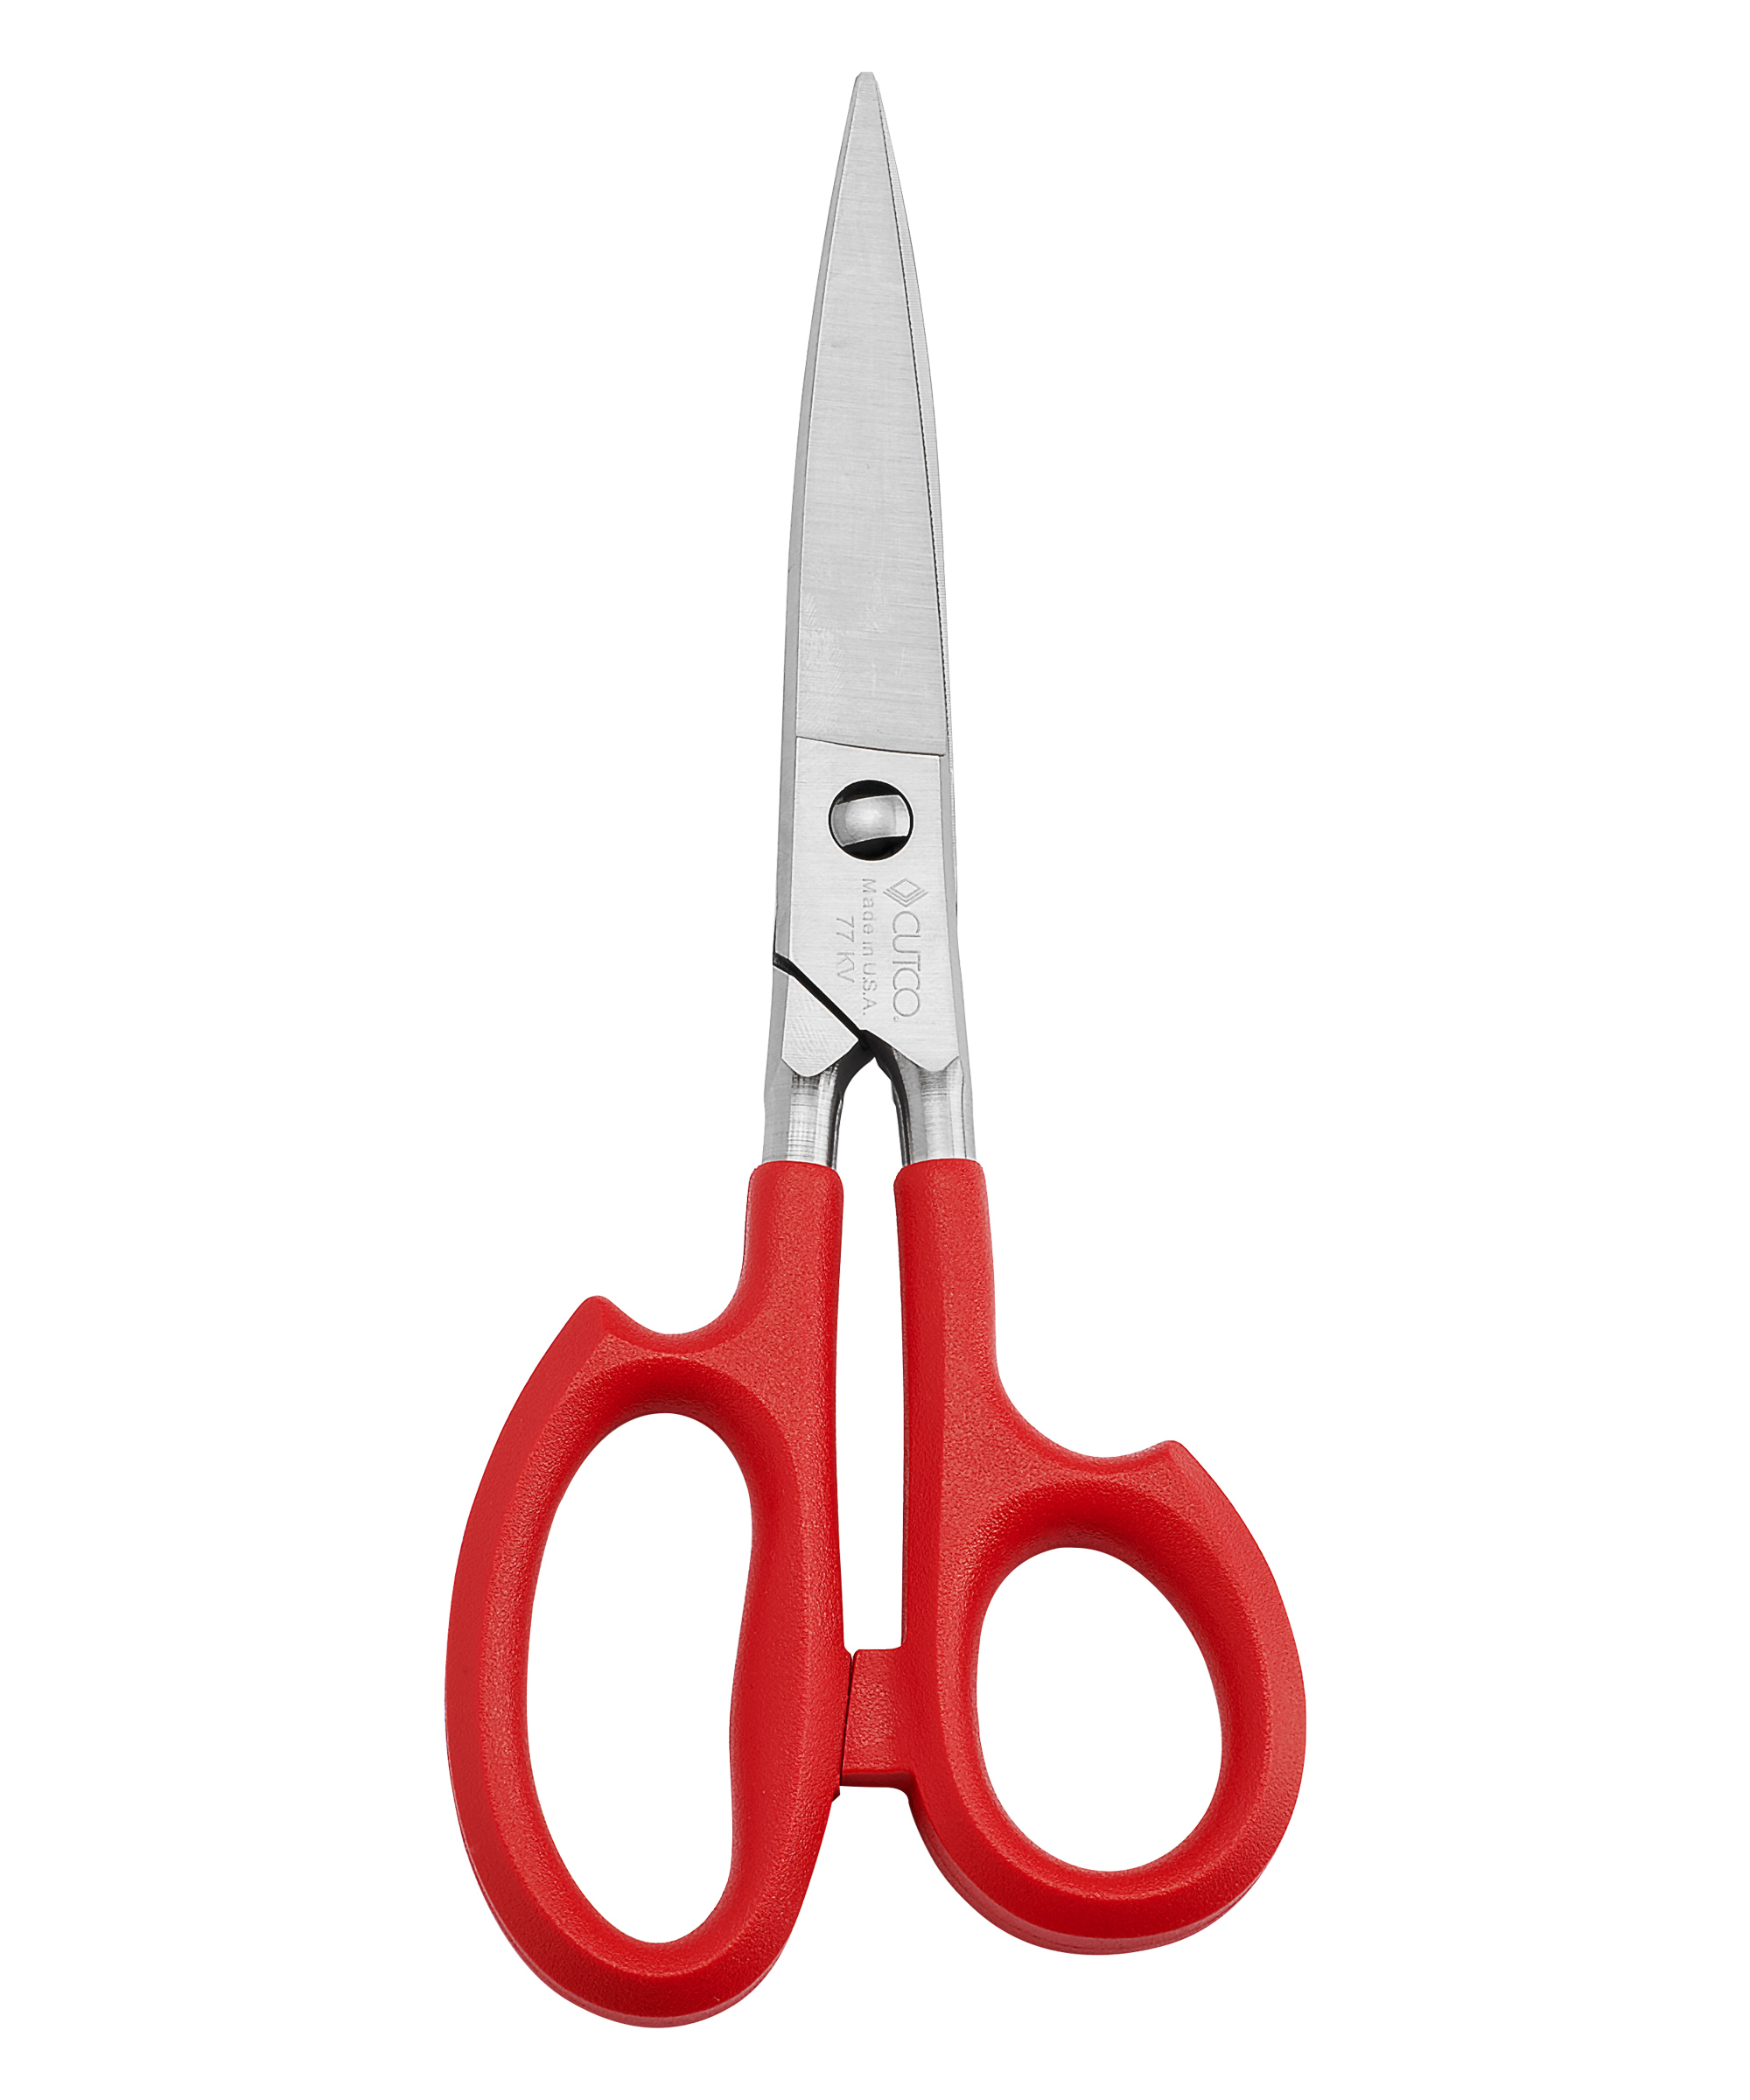 Snagshout  4 Pack Scissors All Purpose, Ultra Sharp Craft